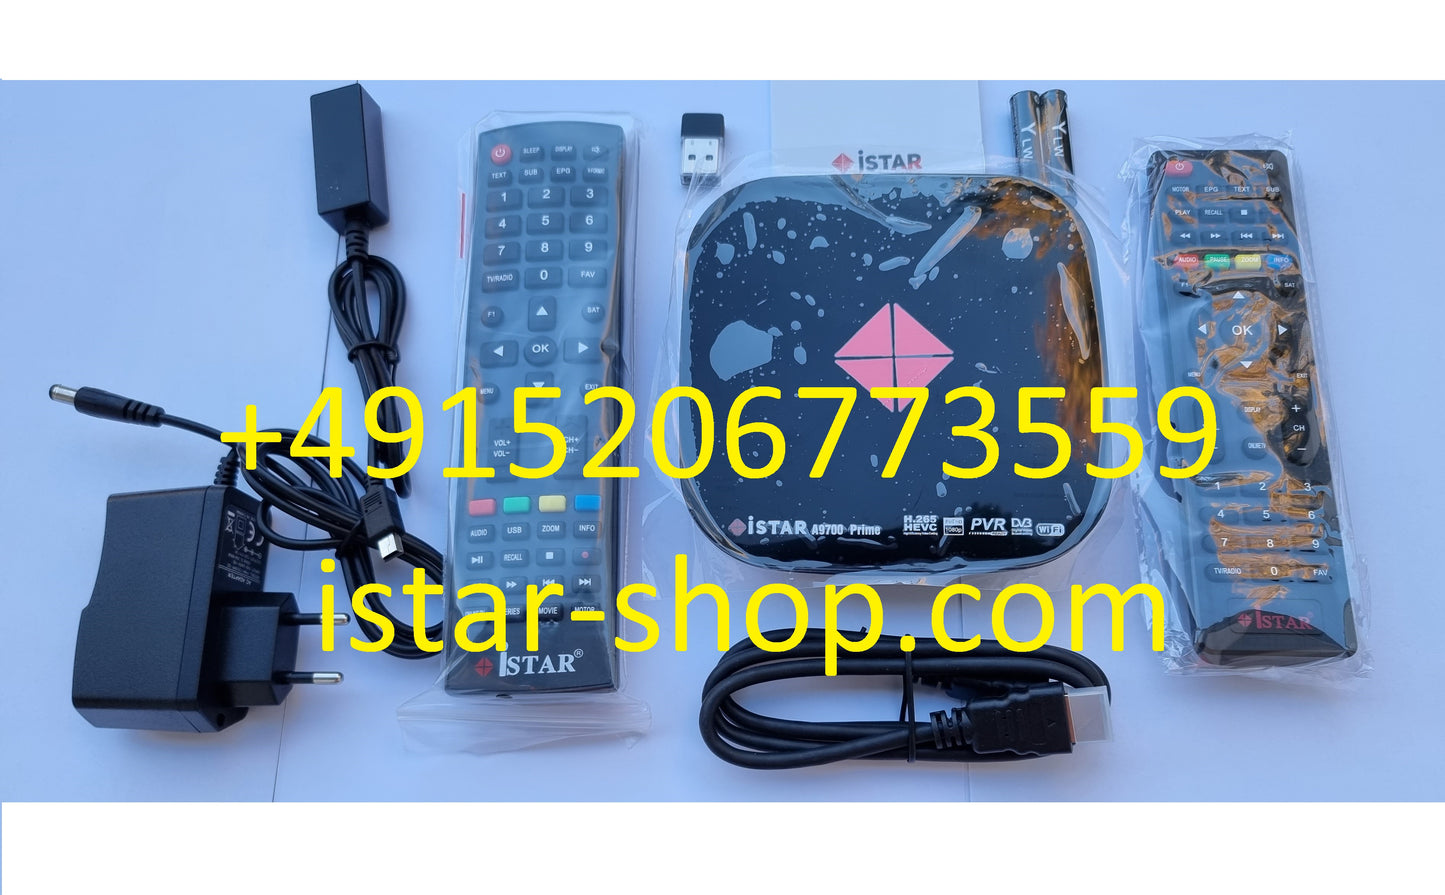 iStar A9700 Prime TVBOX Sat Receiver OnlineTV Online TV Digital Box istar a 9700 prime